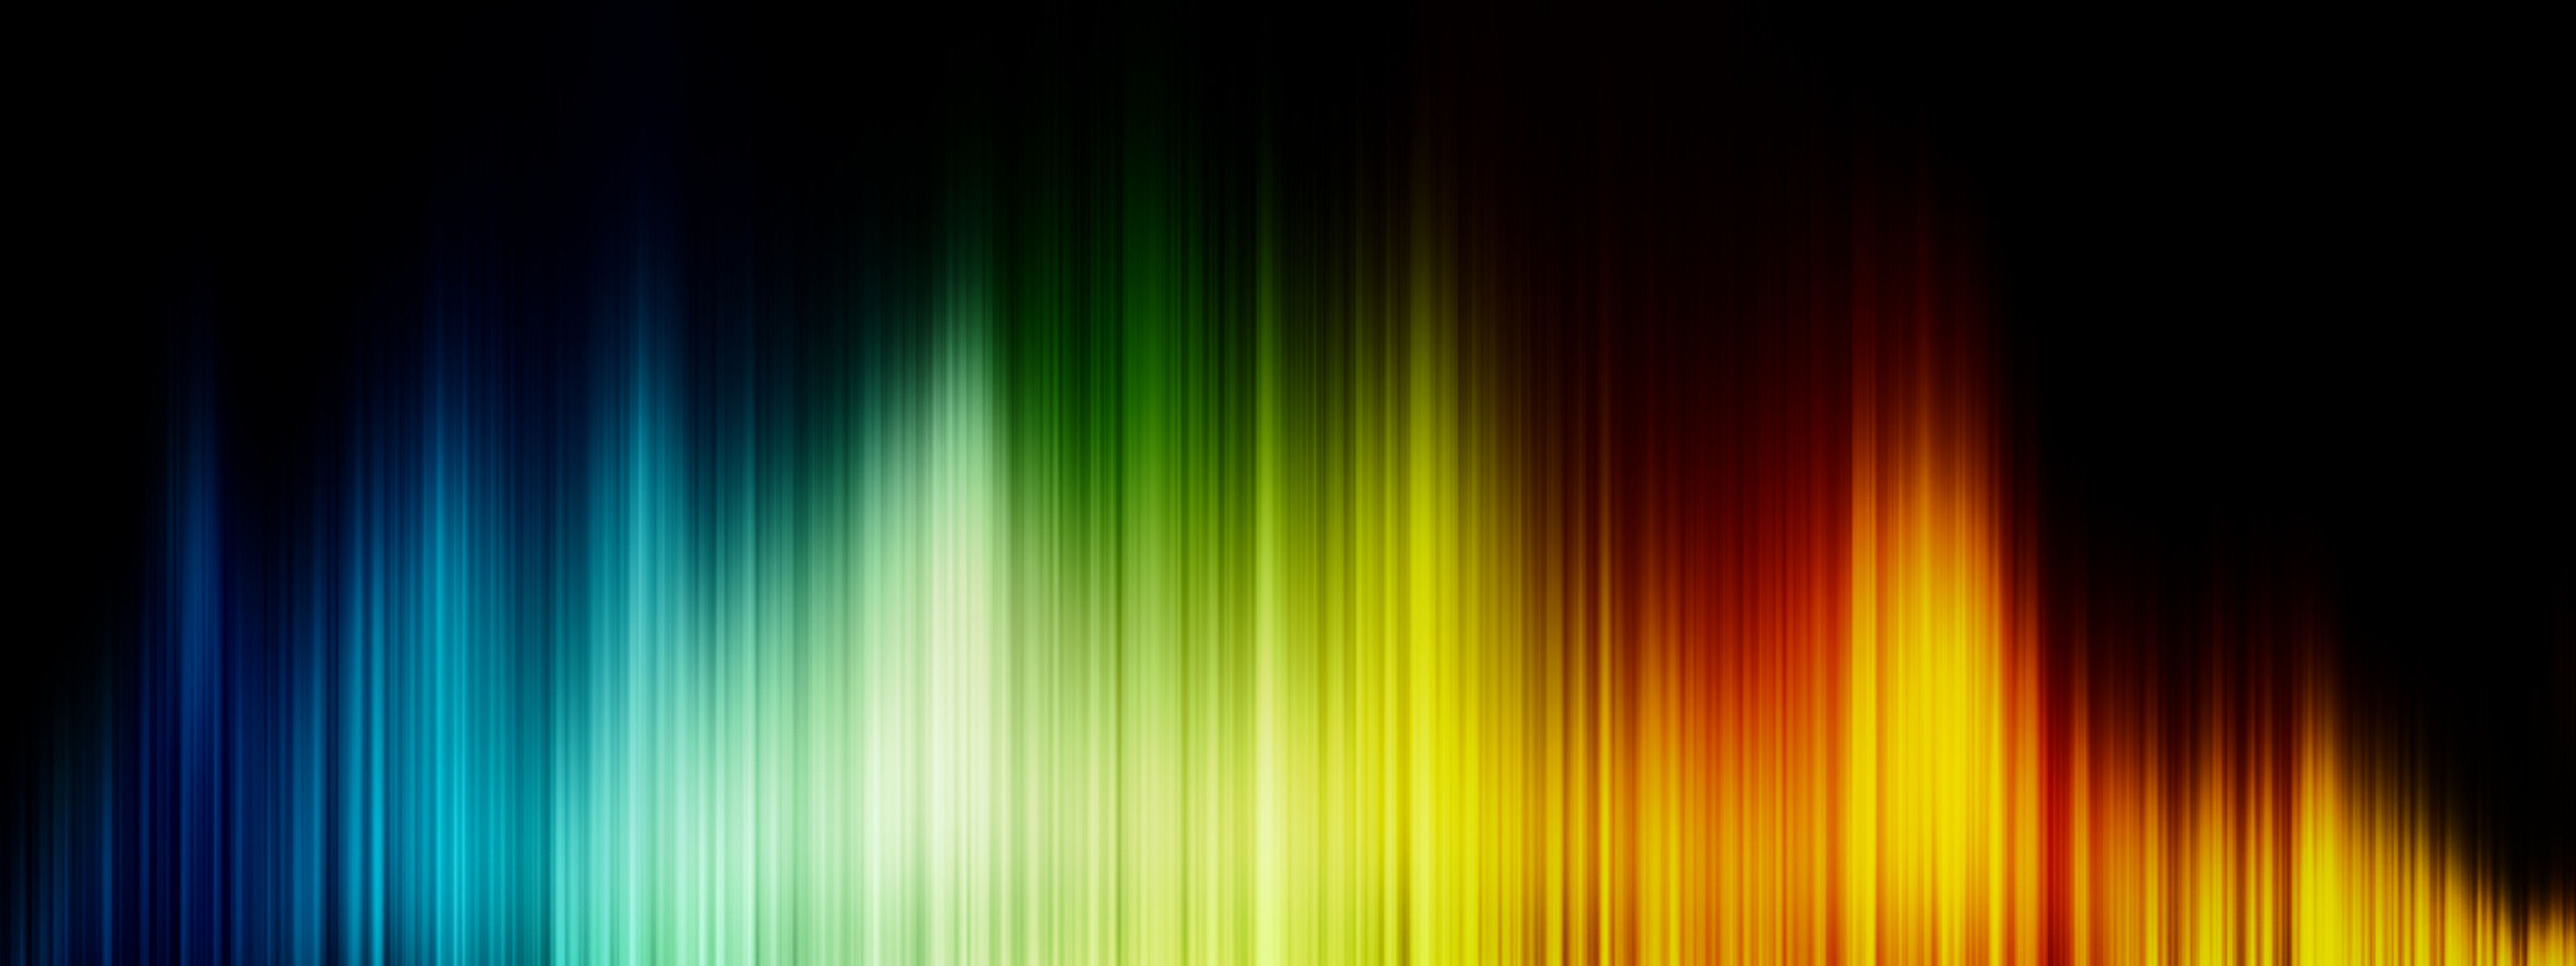 mejor fondo de pantalla,verde,azul,ligero,amarillo,naranja